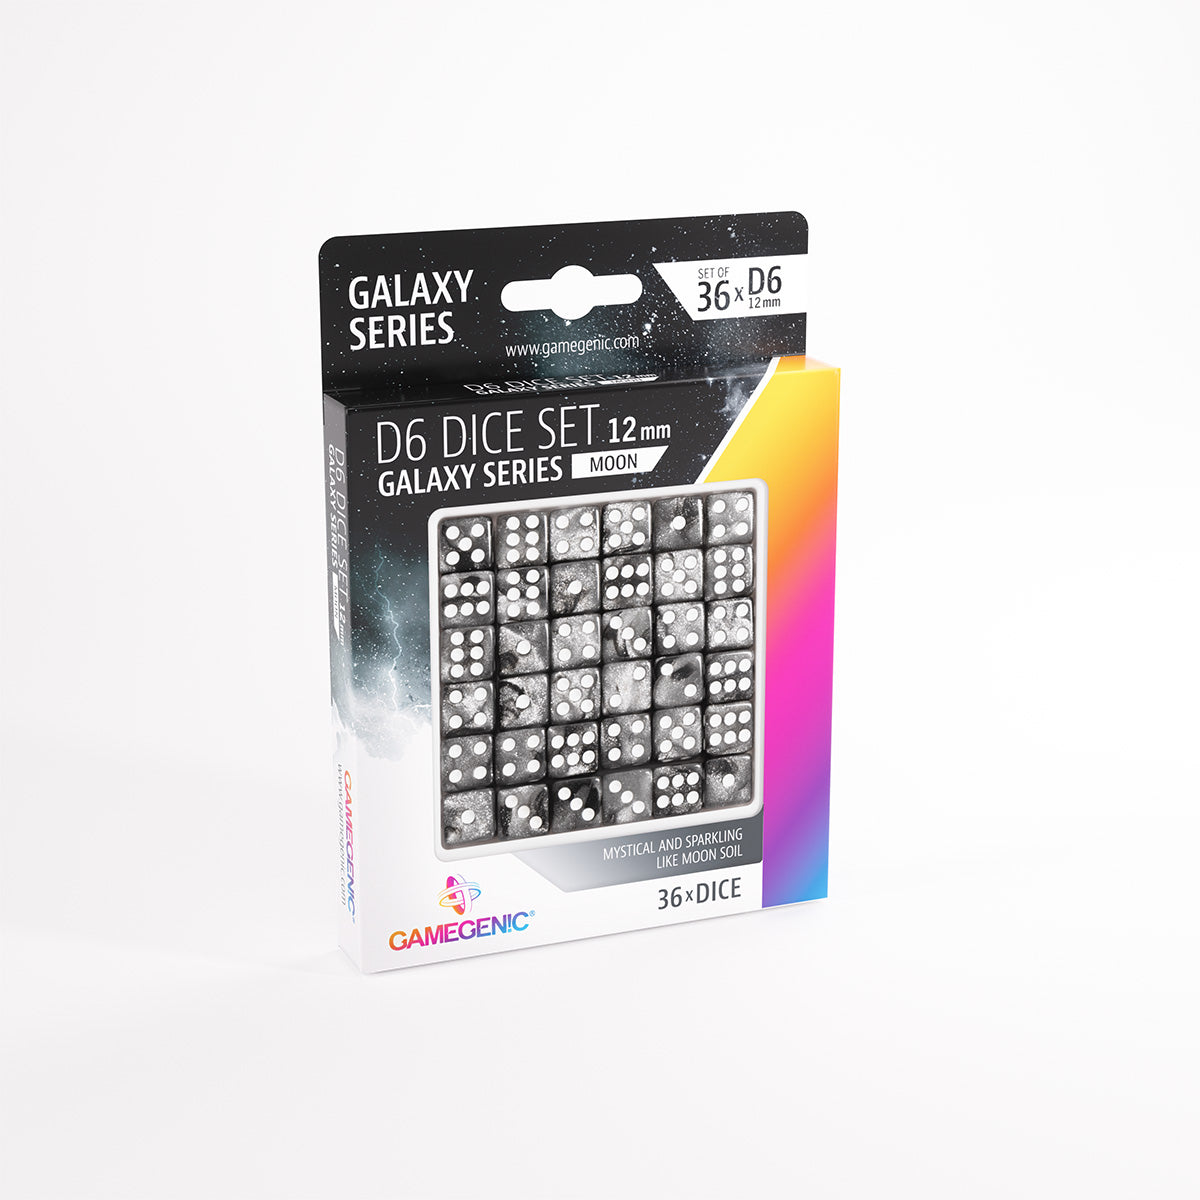 Galaxy Series D6 Dice Set 12mm